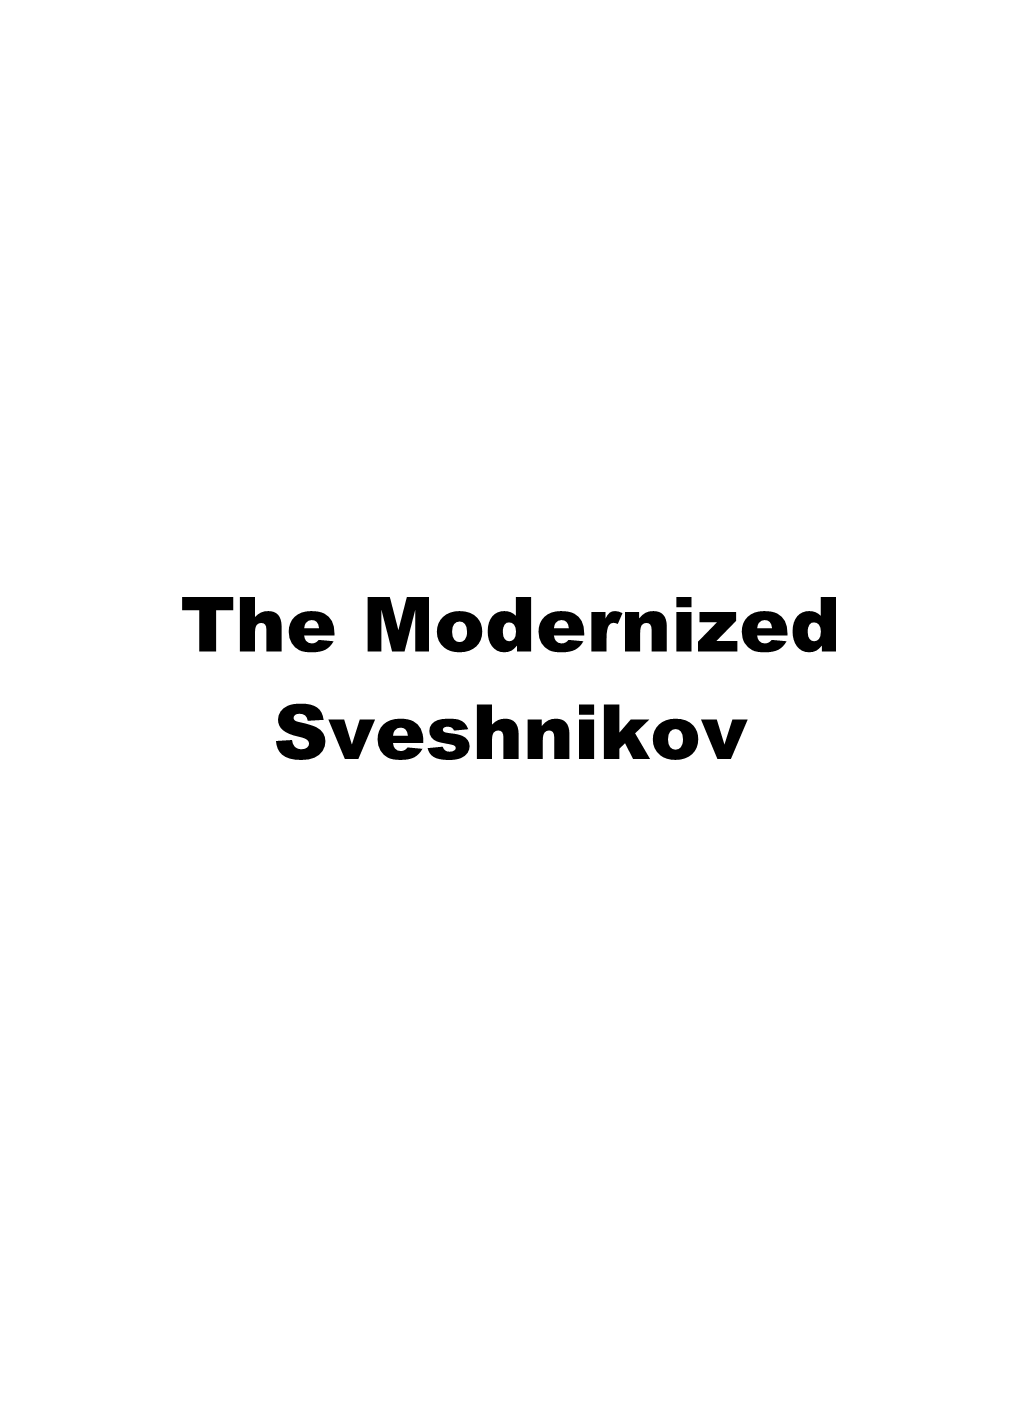 The Modernized Sveshnikov First Edition 2020 by Thinkers Publishing Copyright © 2020 Robert Ris